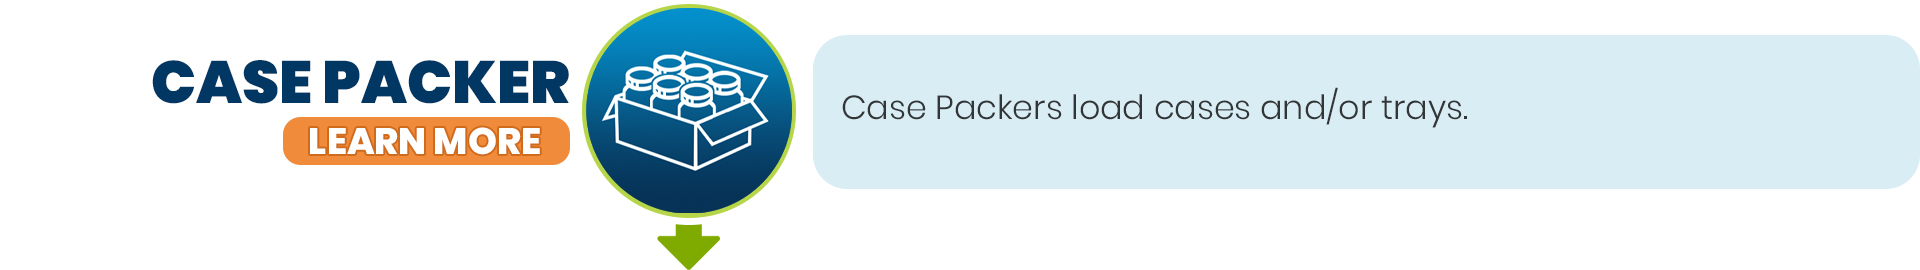 Case Packer - Block